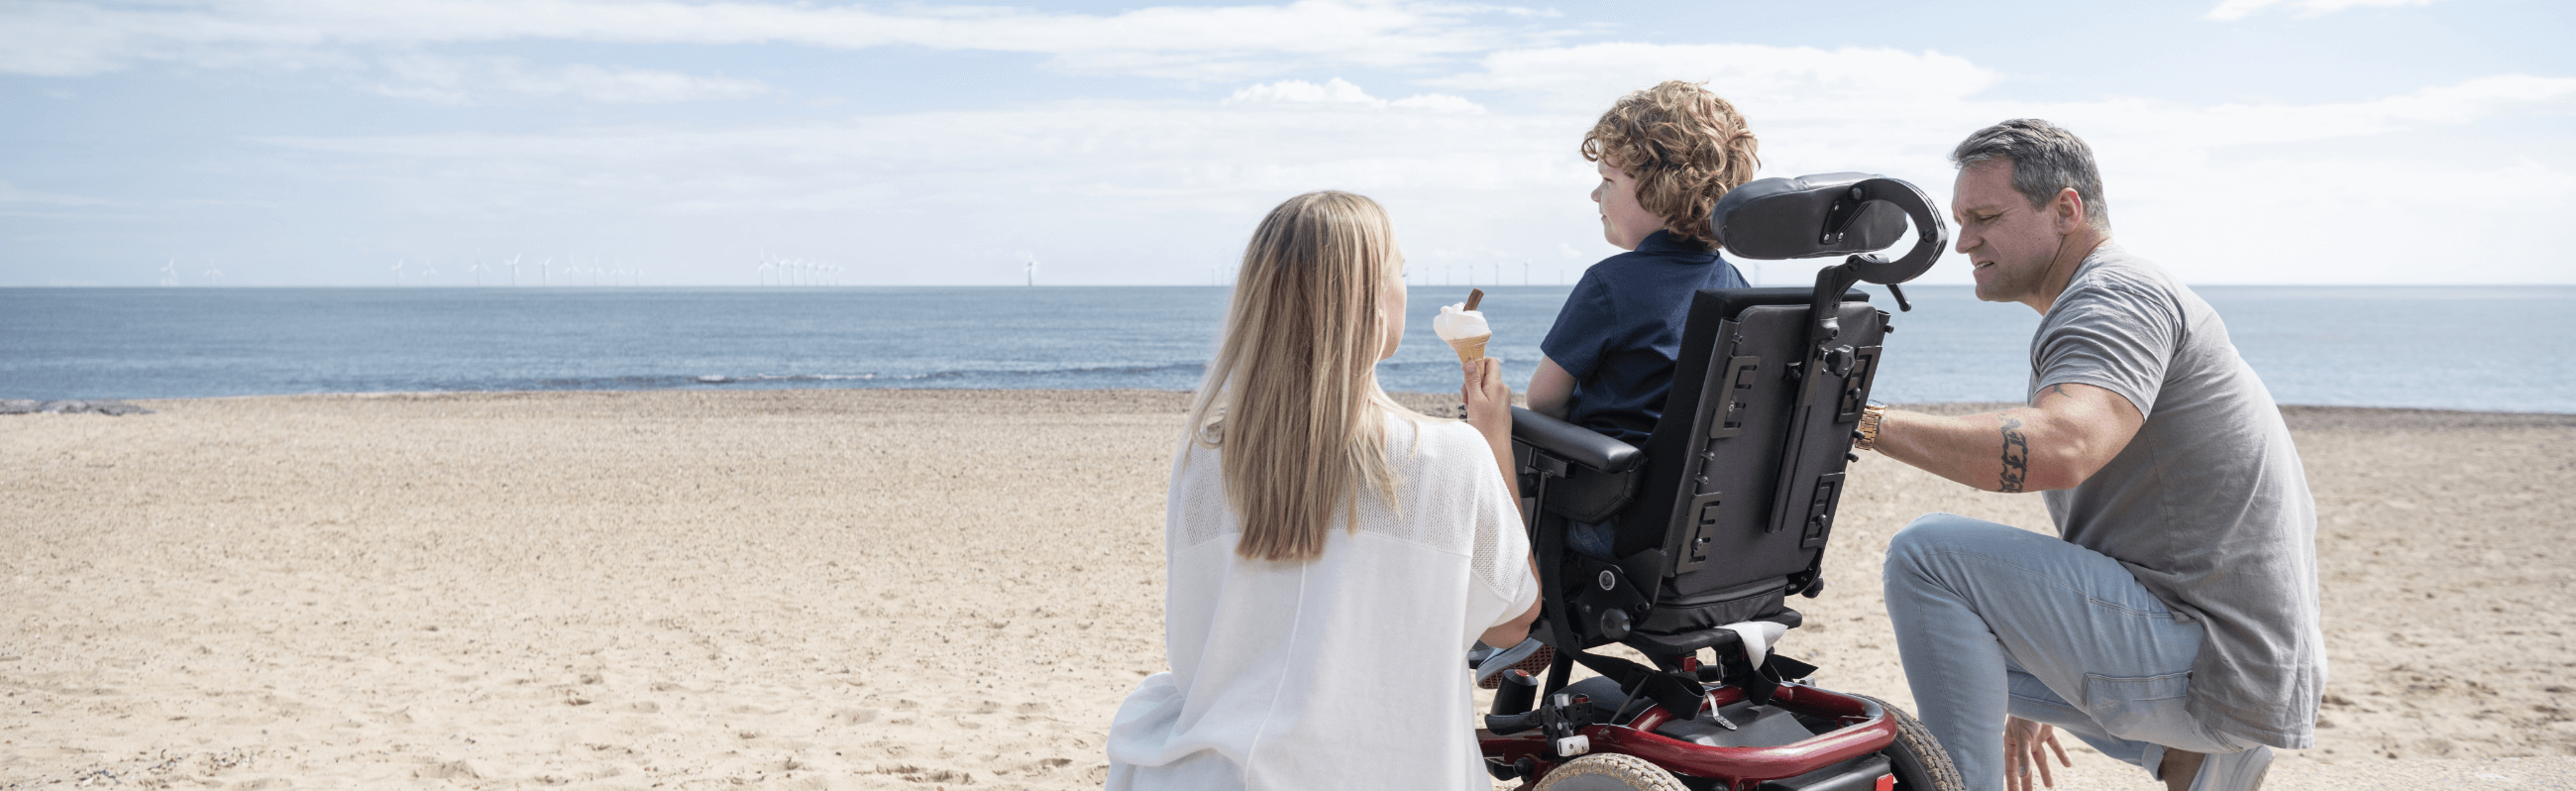 Photograph of a wheelchair-user enjoying the beach